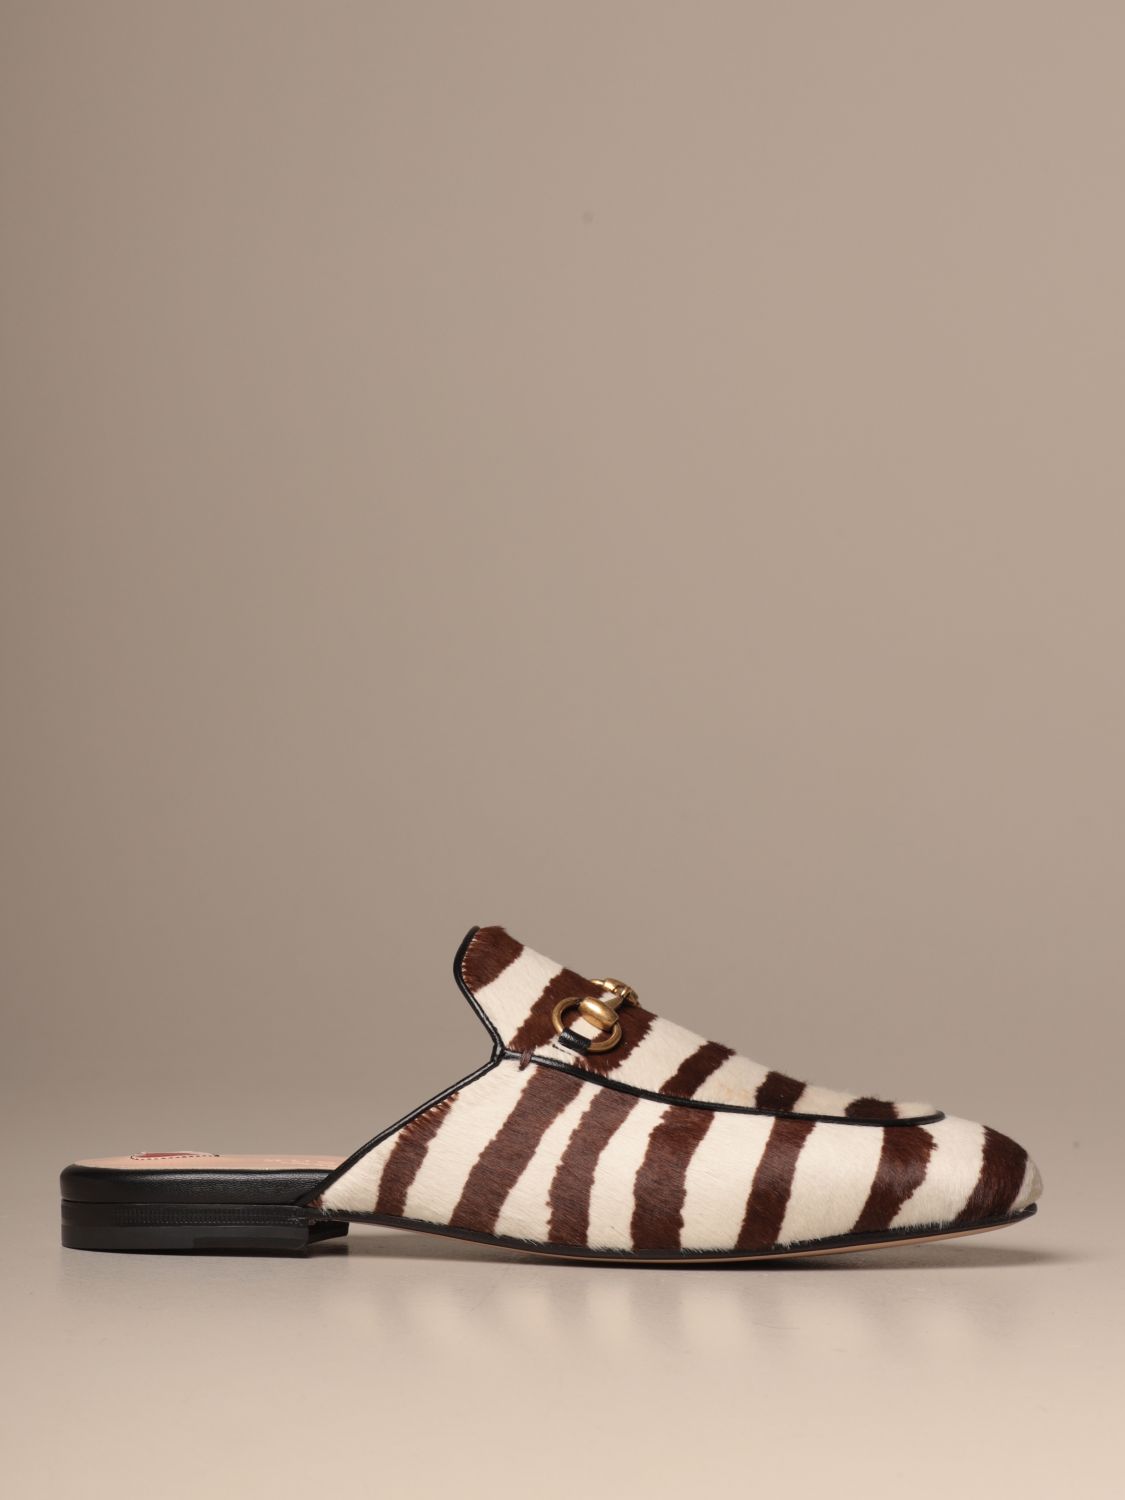 gucci zebra loafers